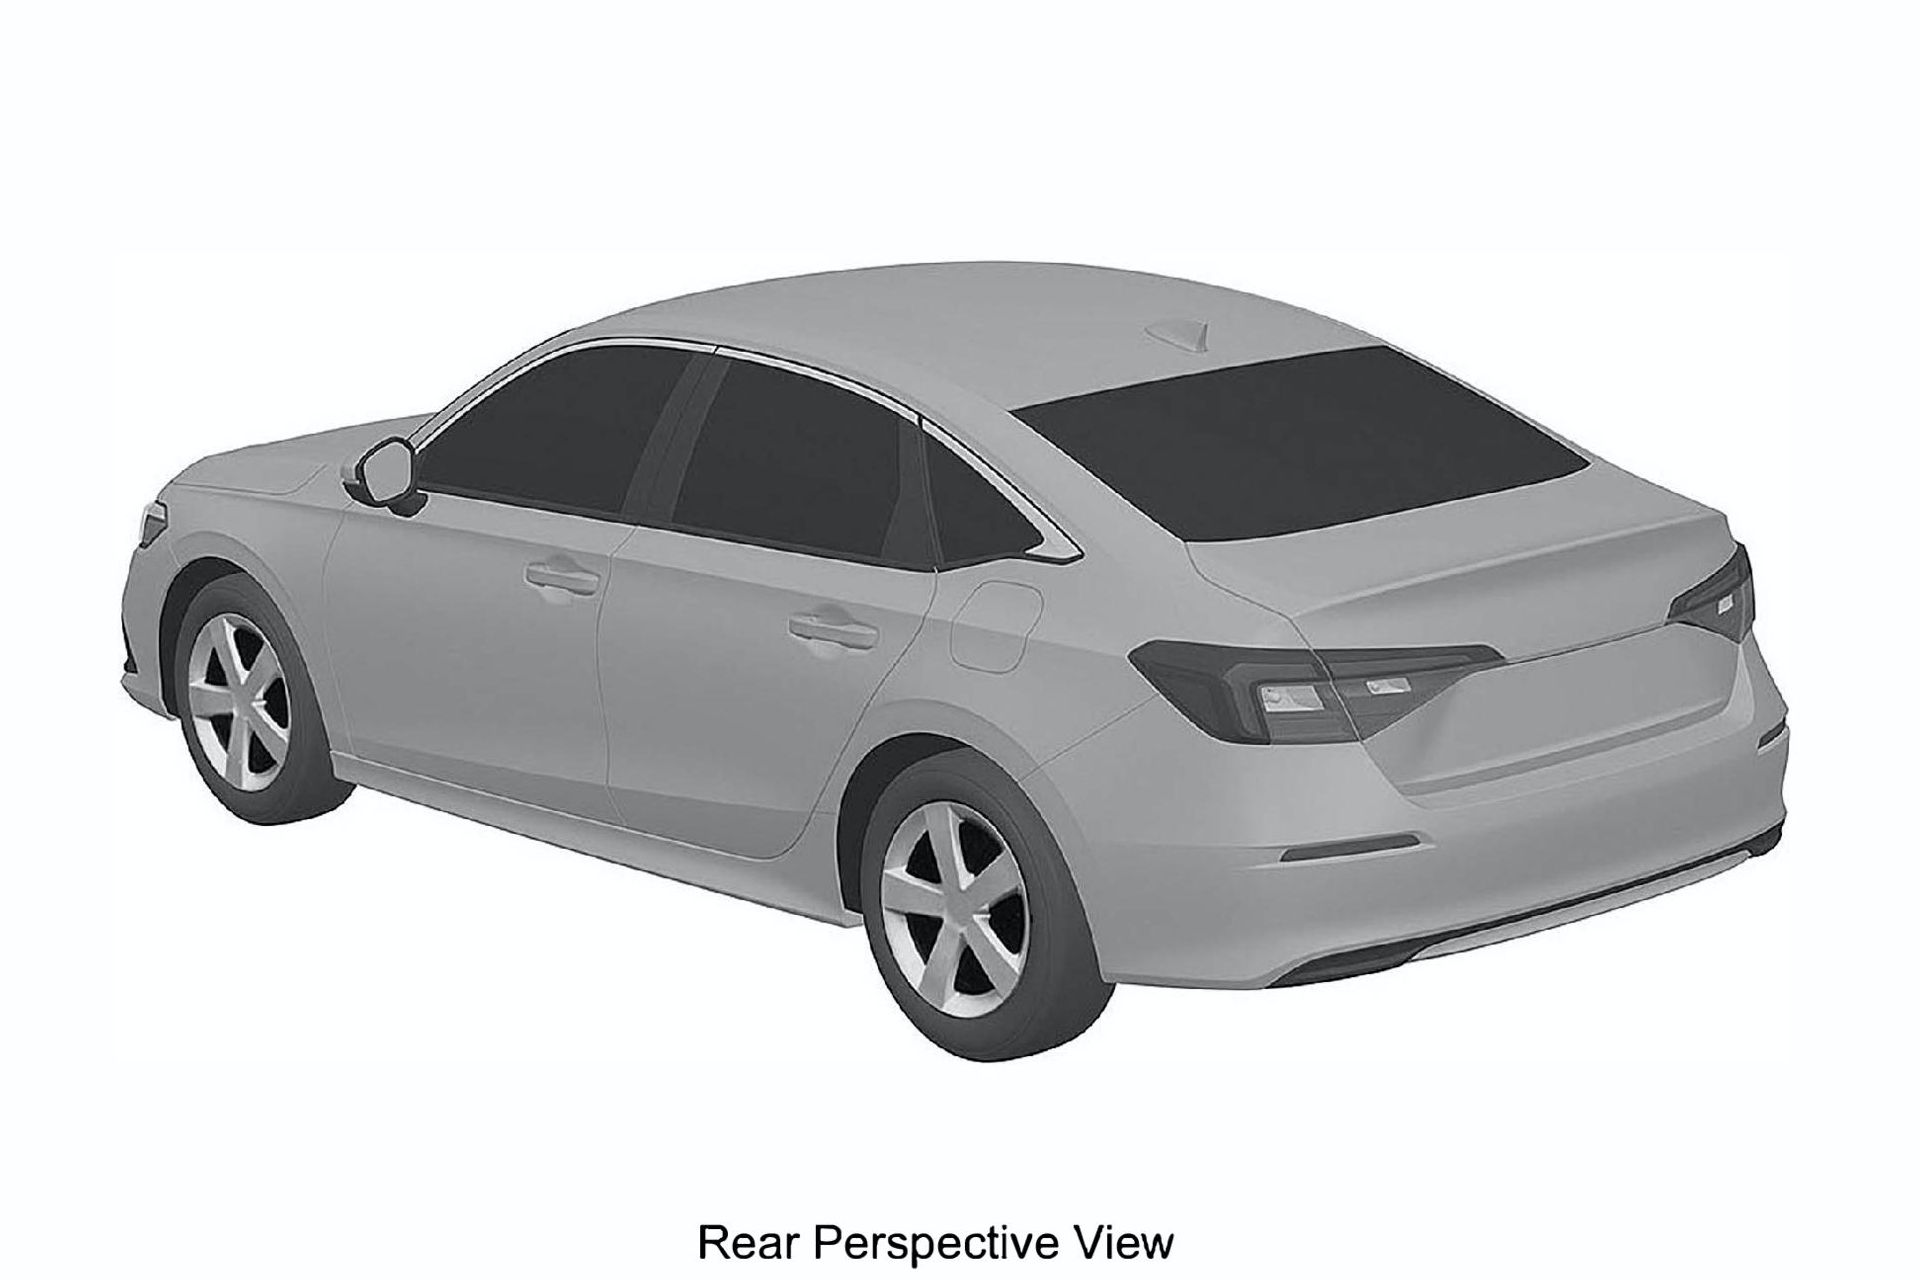 Honda Civic 2022 tiếp lục lộ ảnh không nguỵ trang 2022-honda-civic-sedan-patent-images-2.jpg